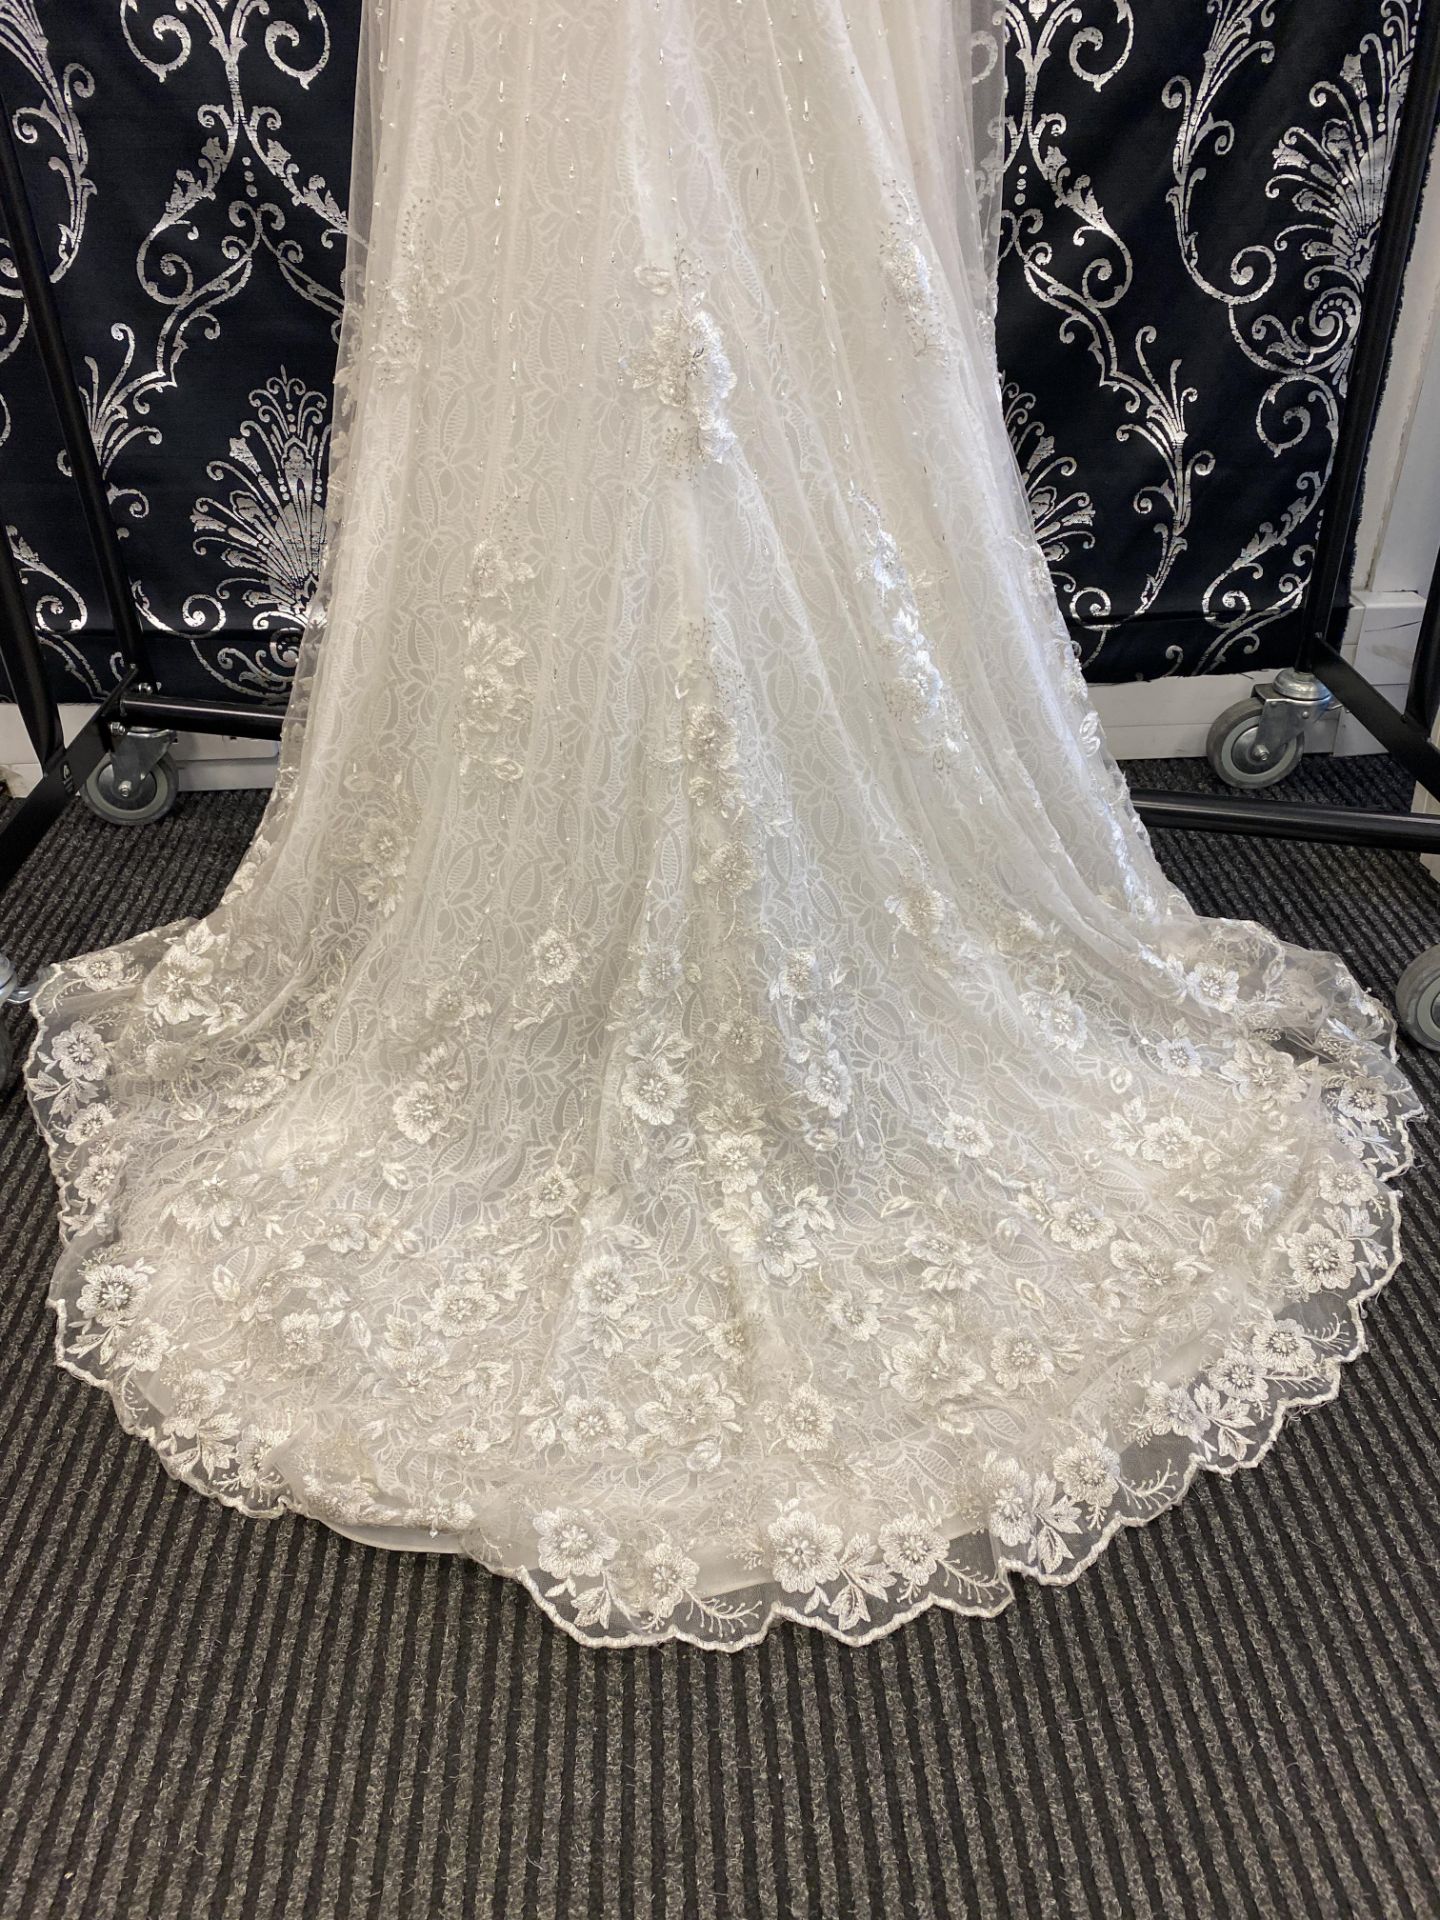 1 x LUSAN MANDONGUS 'Anastasia' Stunning Lace And Embroidered Designer Wedding Dress RRP £1,850 UK12 - Image 2 of 10